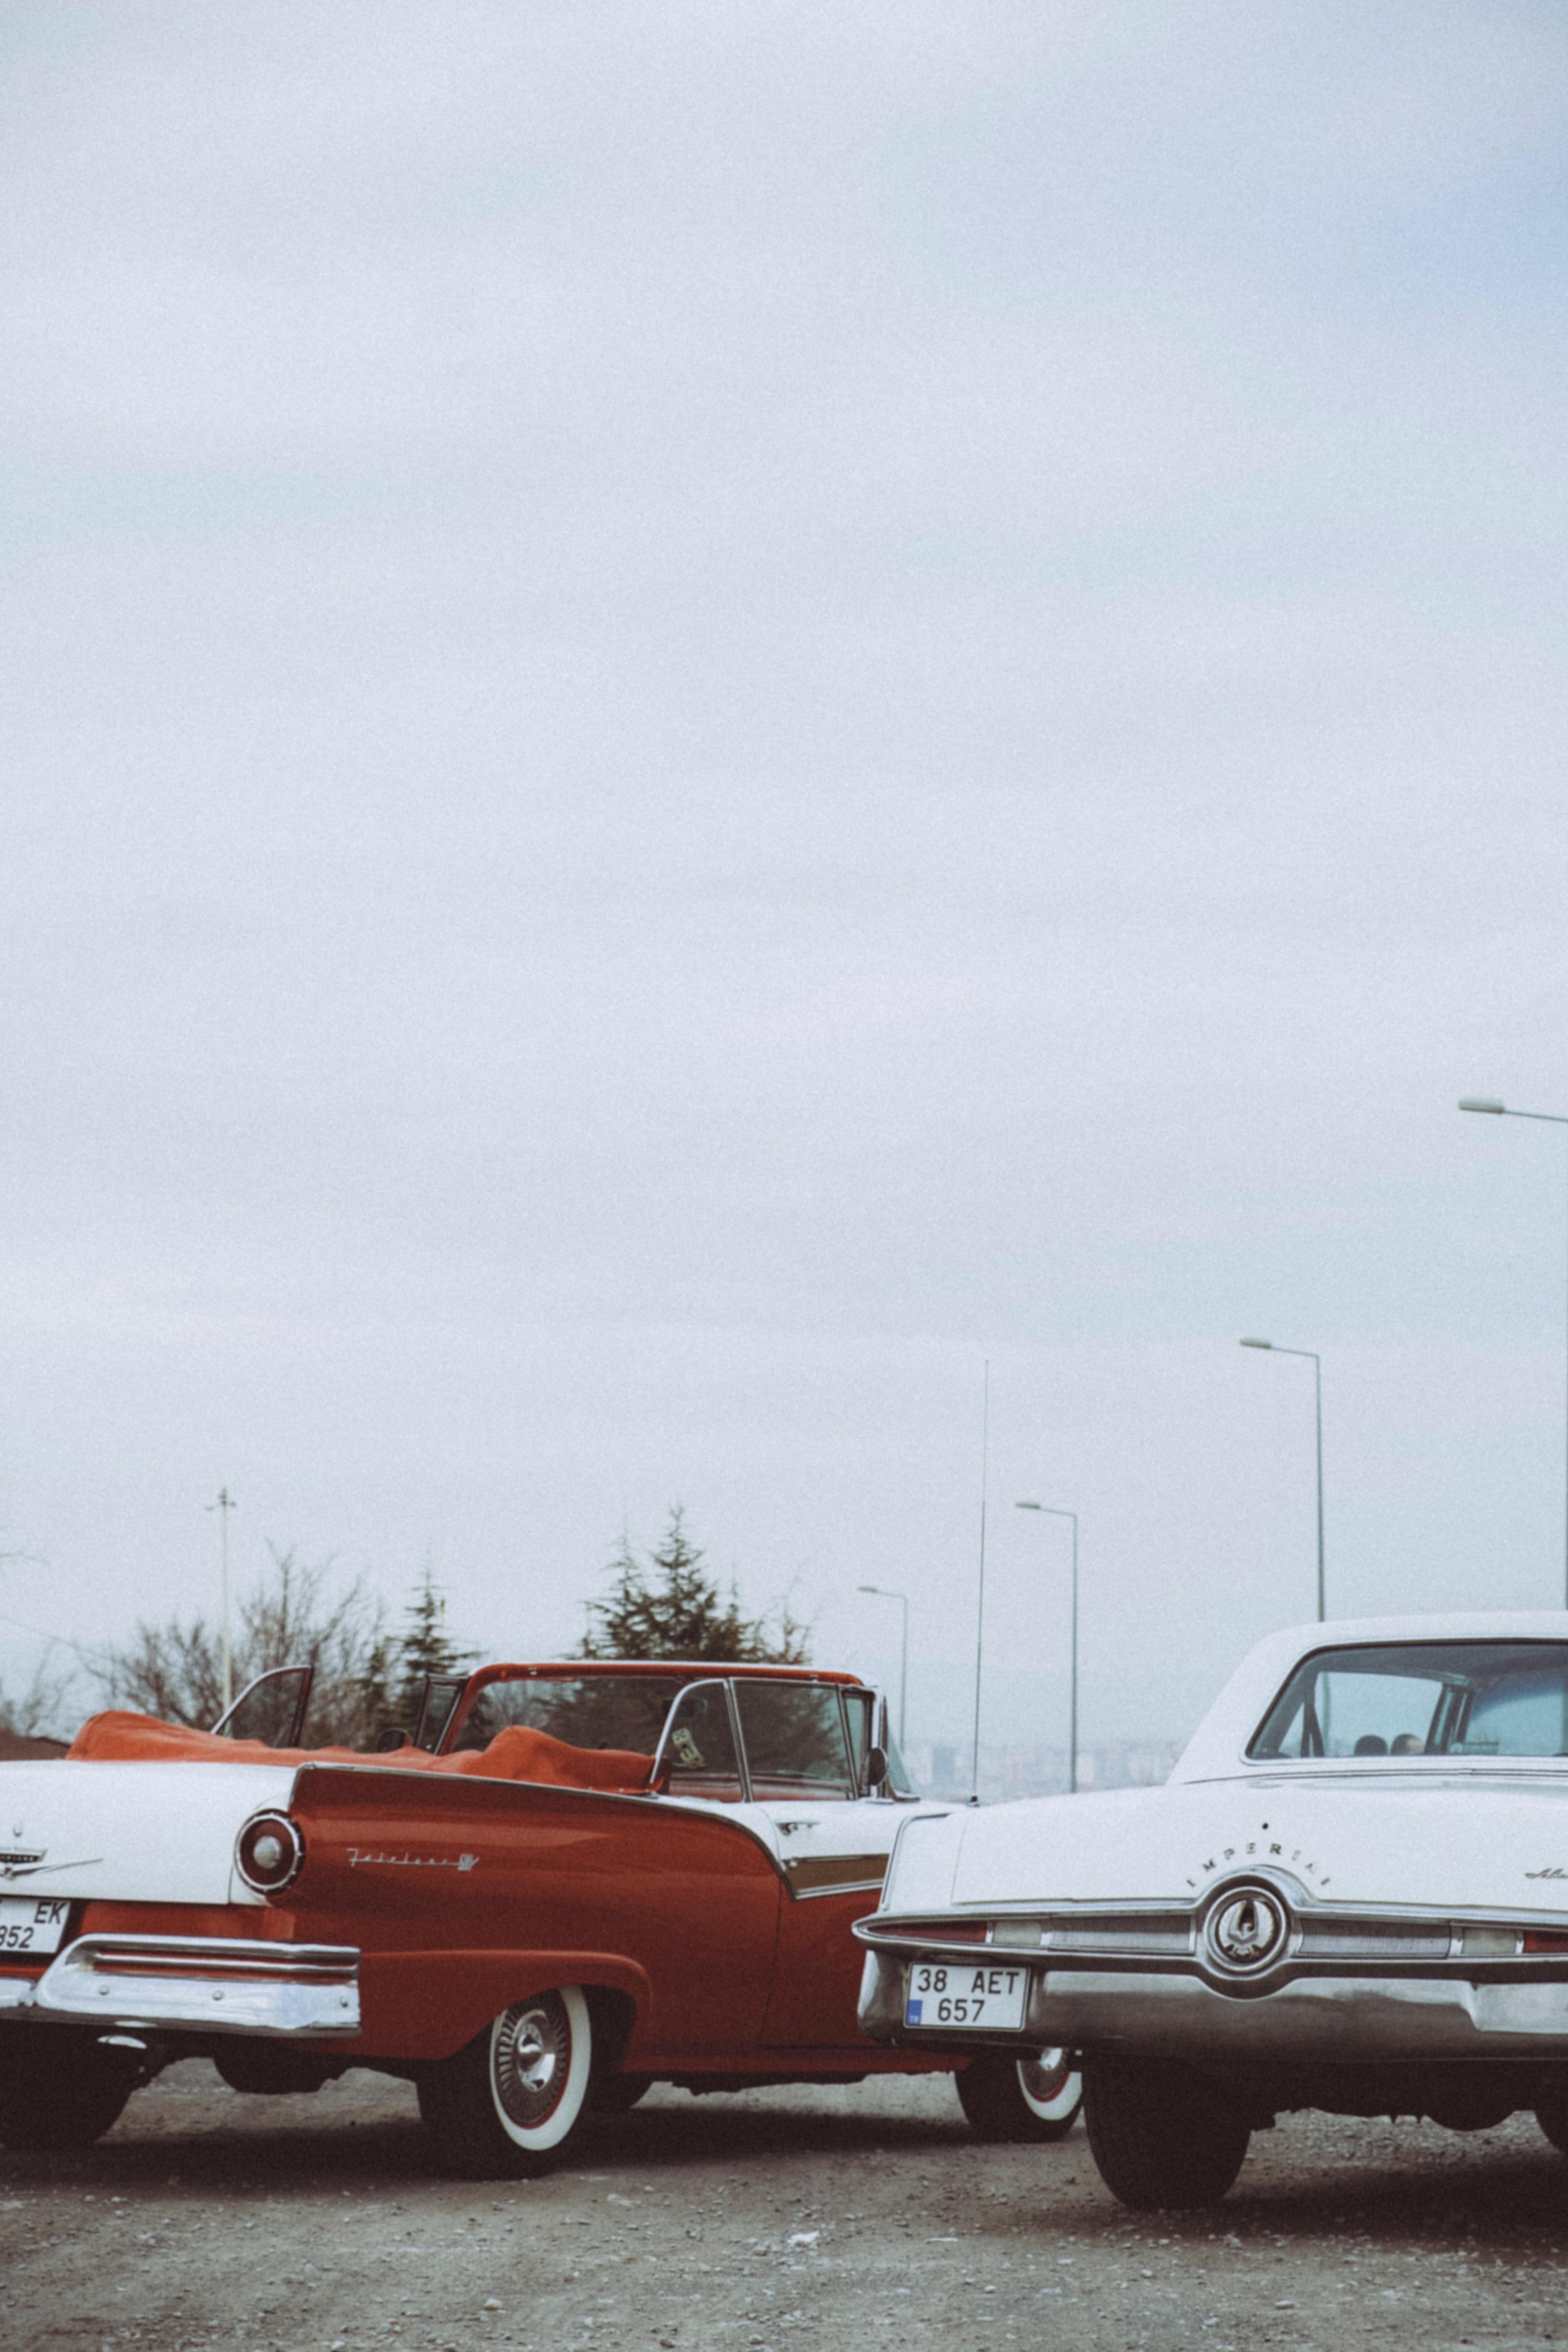 classic Chrysler cars